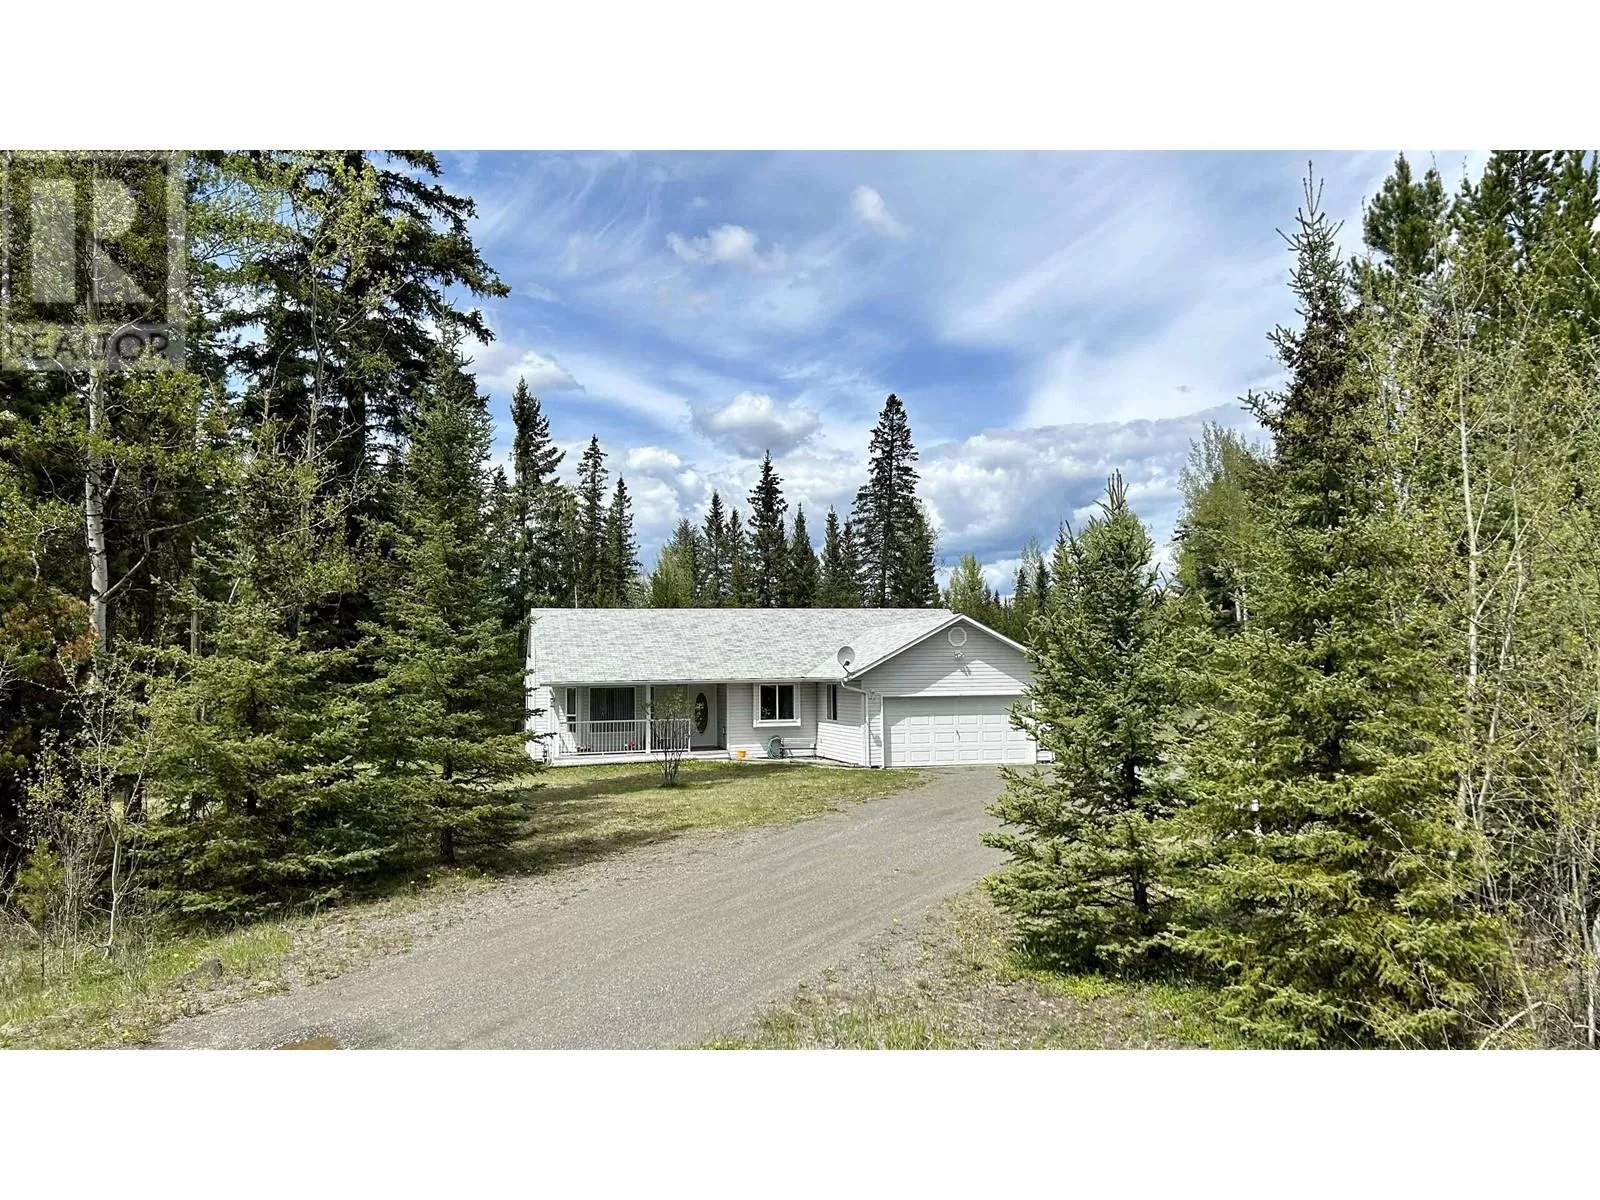 House for rent: 6169 Horse Lake Road, Horse Lake, British Columbia V0K 2E3